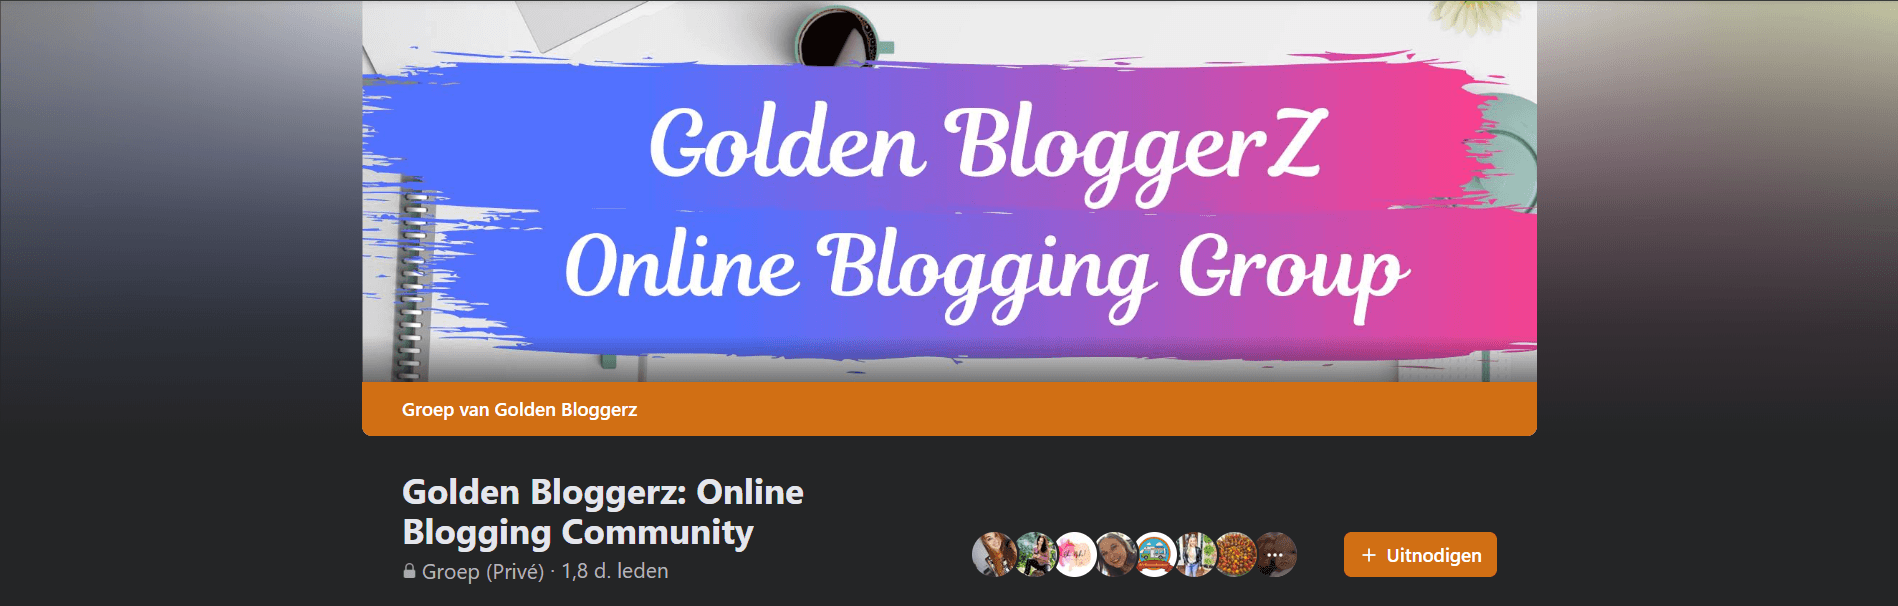 Golden Bloggerz online blogging group